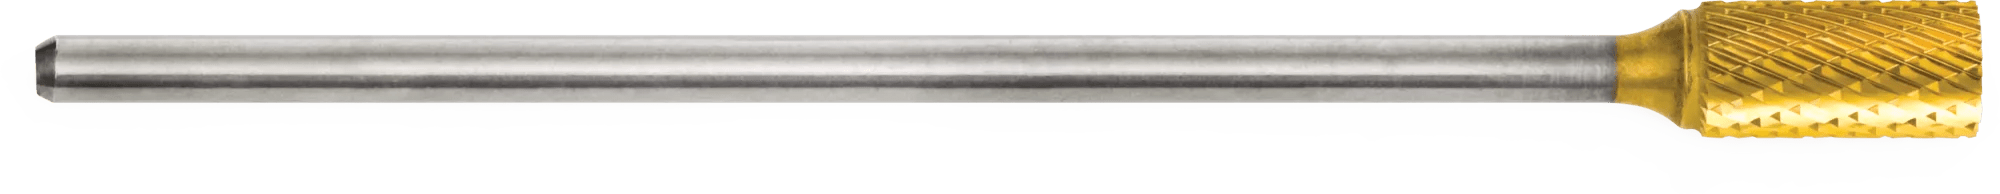 3/8" x 3/4" TiN Coated Cylindrical Flat End Tungsten Carbide Bur